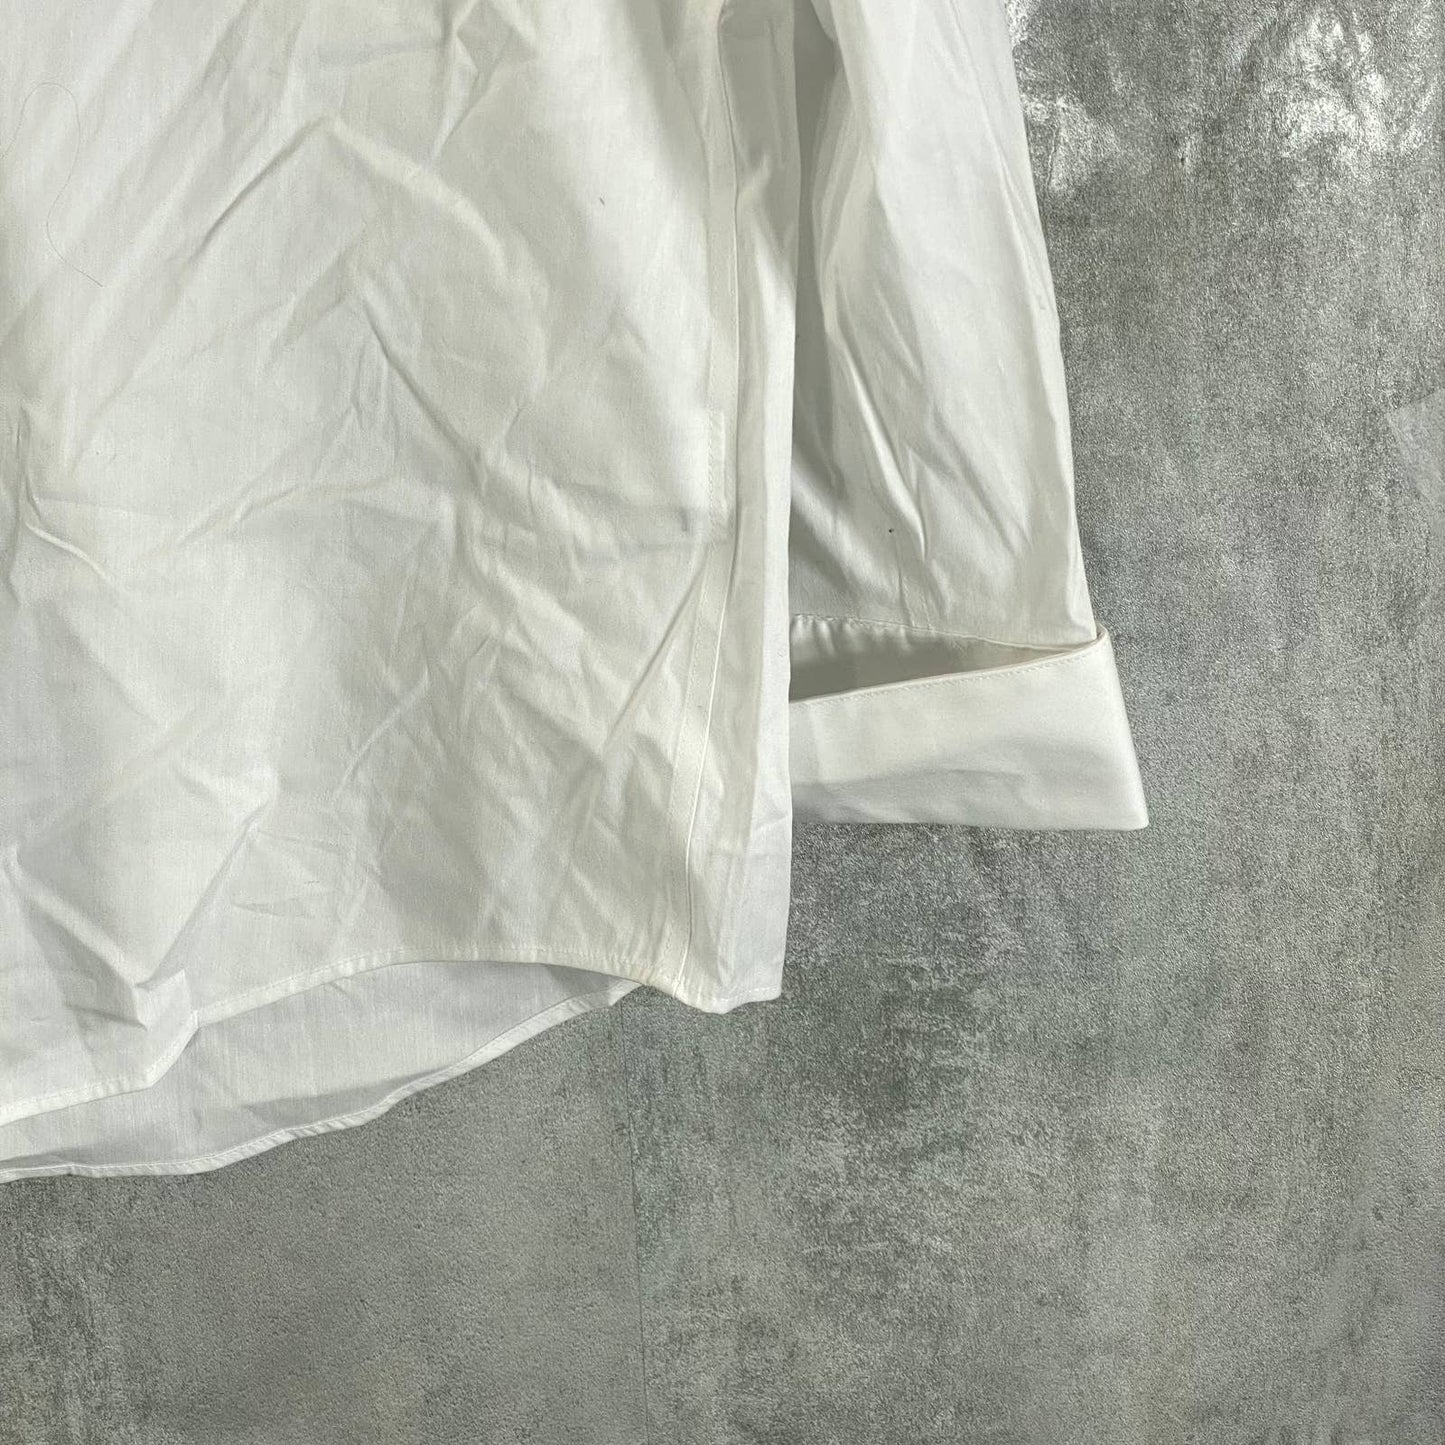 ALFANI Men's White Slim-Fit 2-Way Stretch Dress Shirt SZ L(16/16.5 32/33)